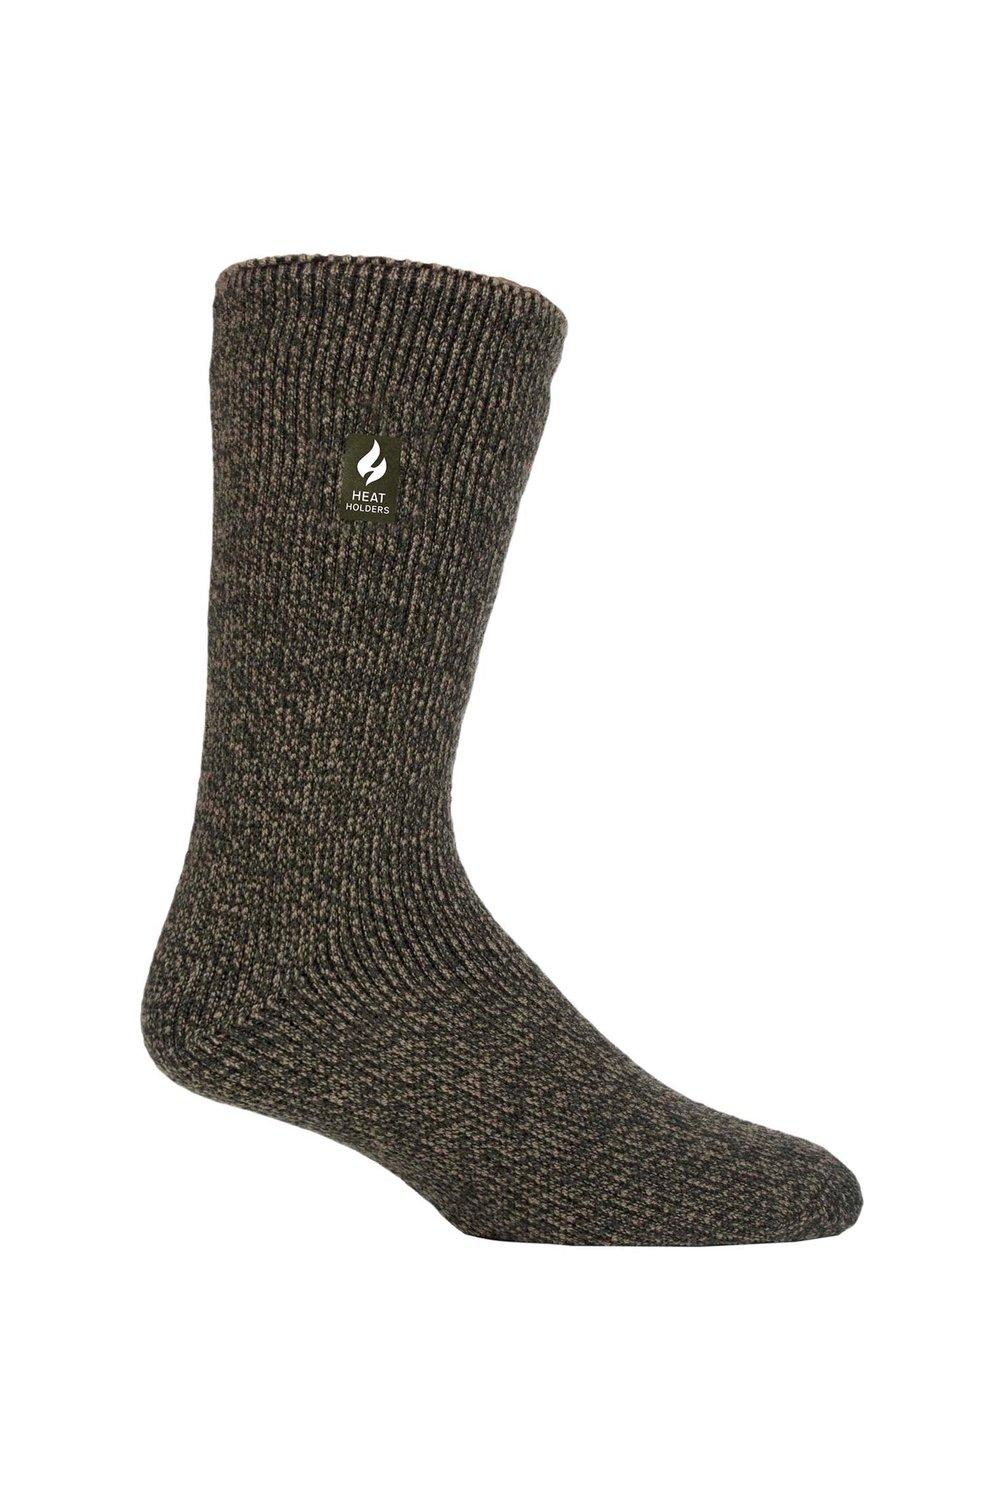 1 Pair 2.9 TOG Merino Wool Socks